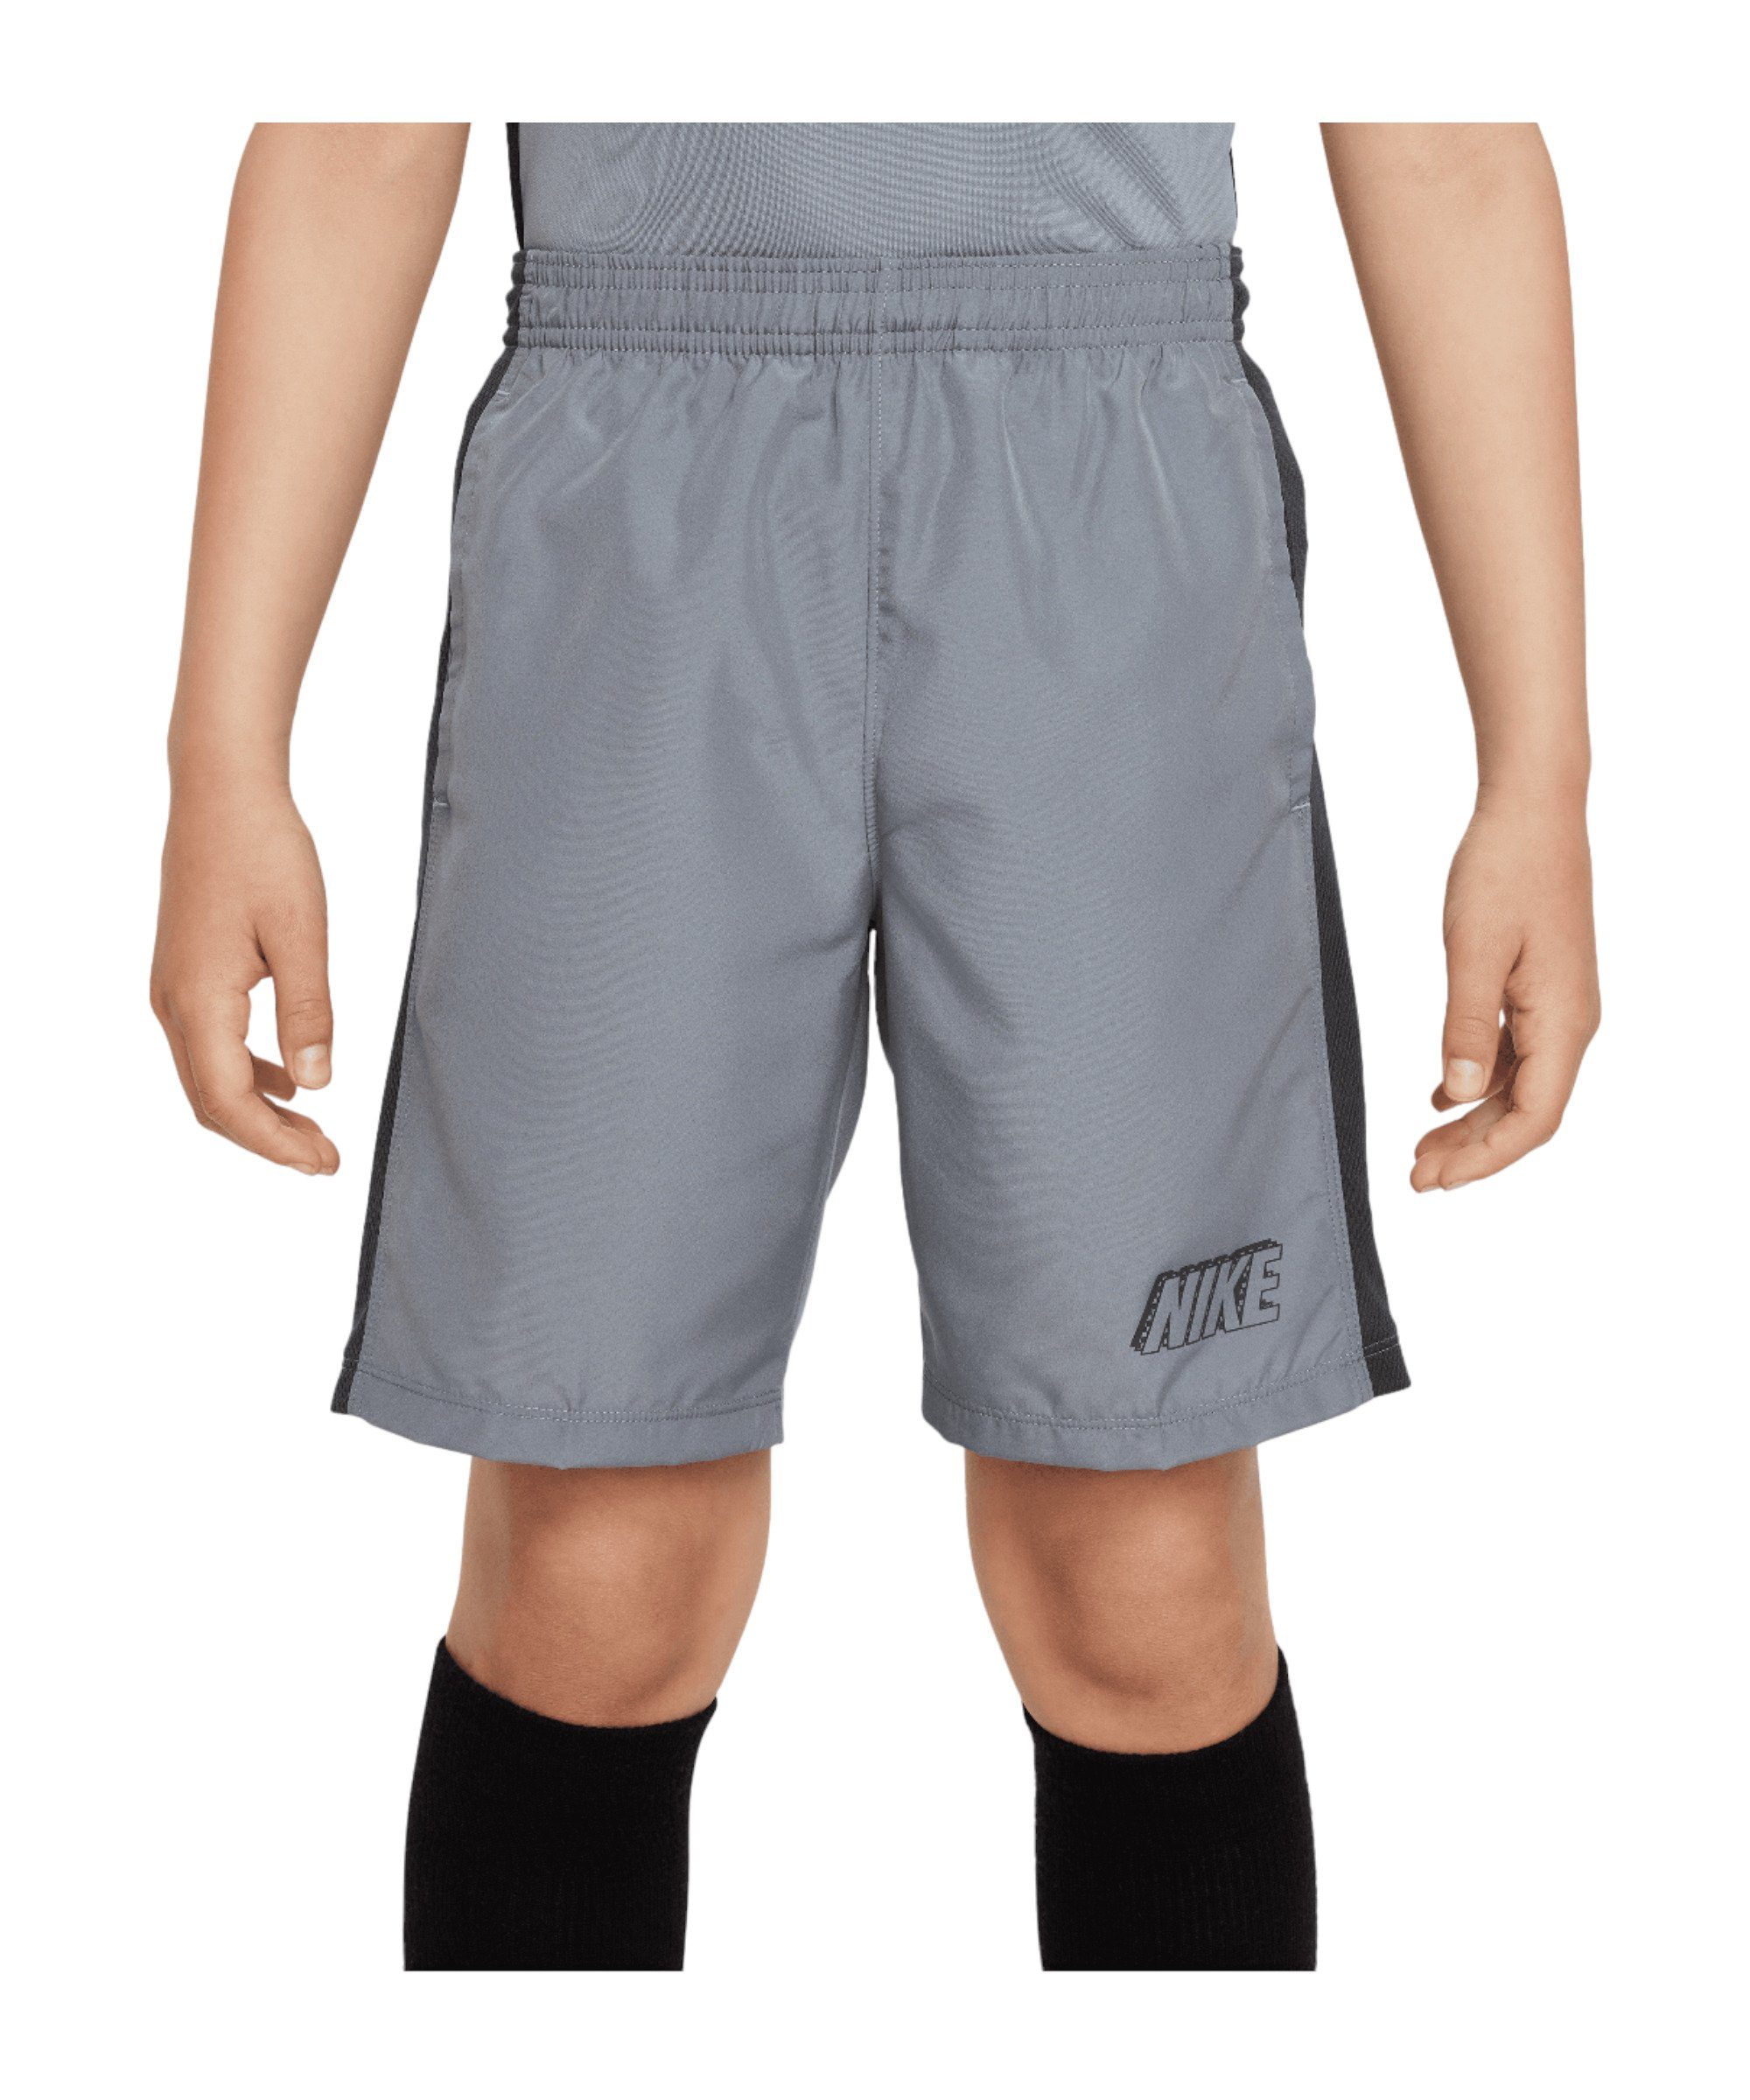 graugraugrau 23 Academy Nike Sporthose Kids Shorts